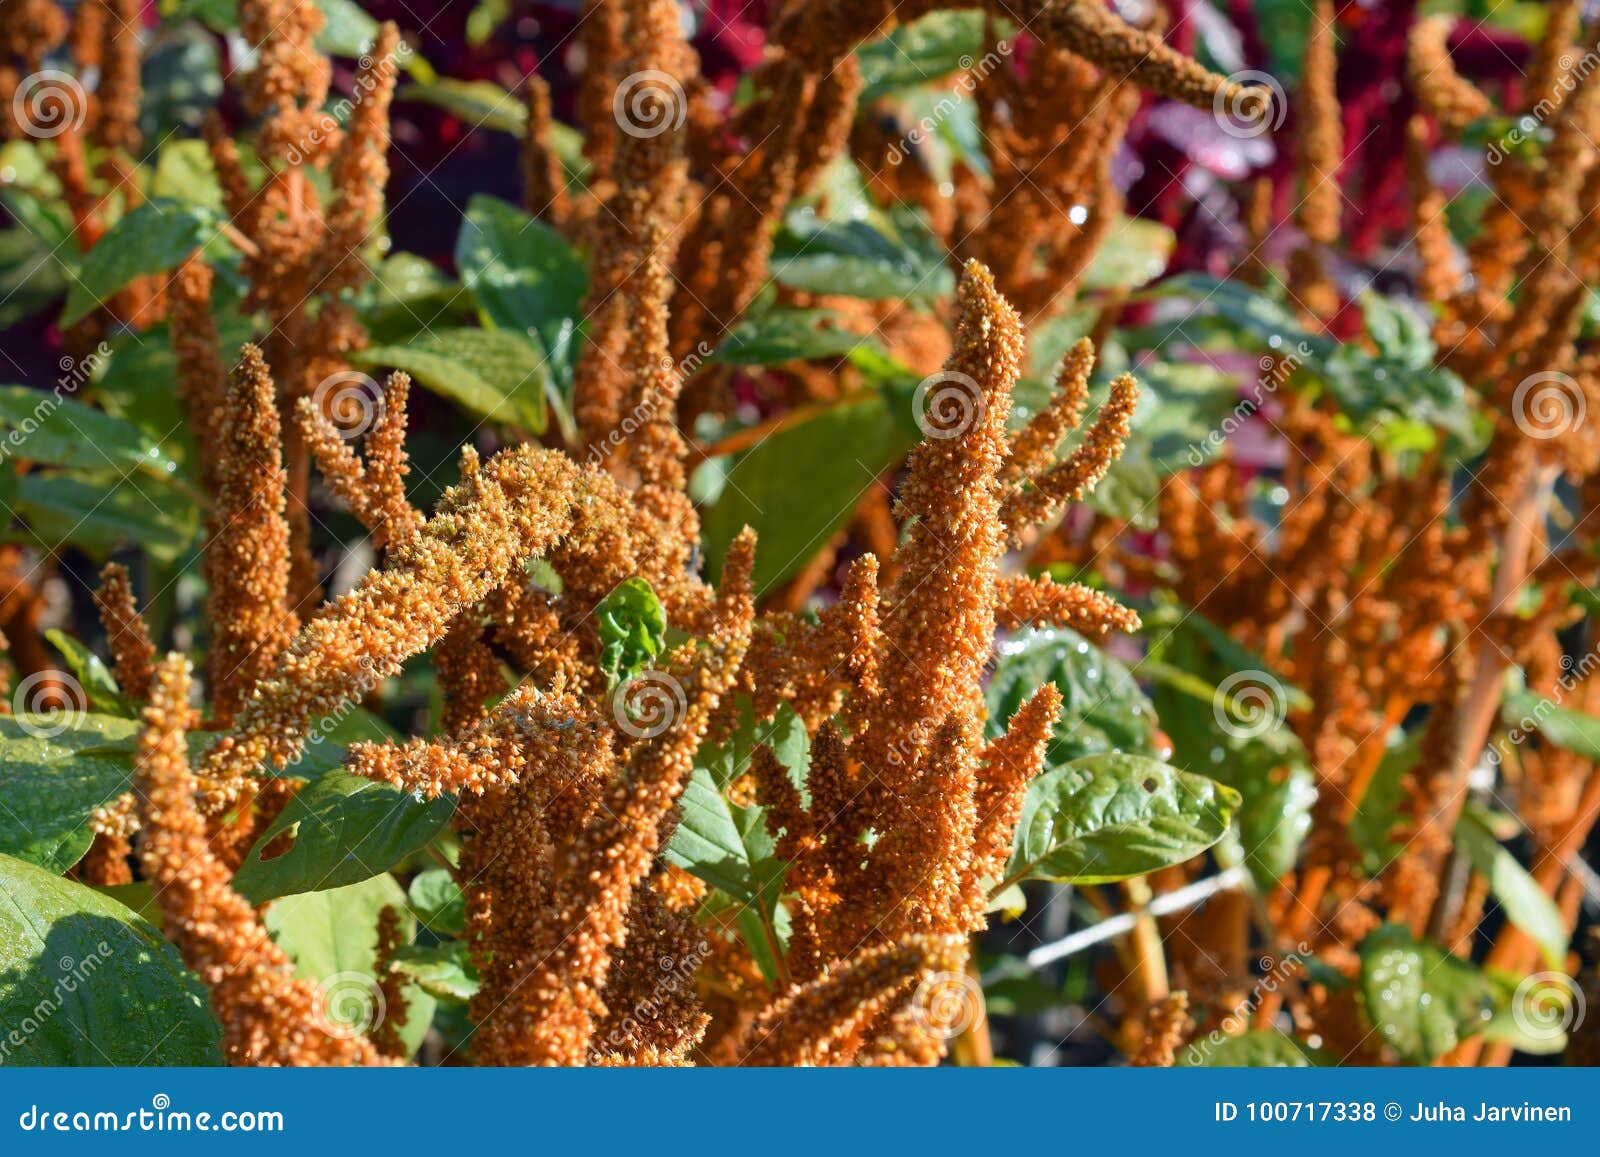 amaranthus cruentus bronze / brown color flowers